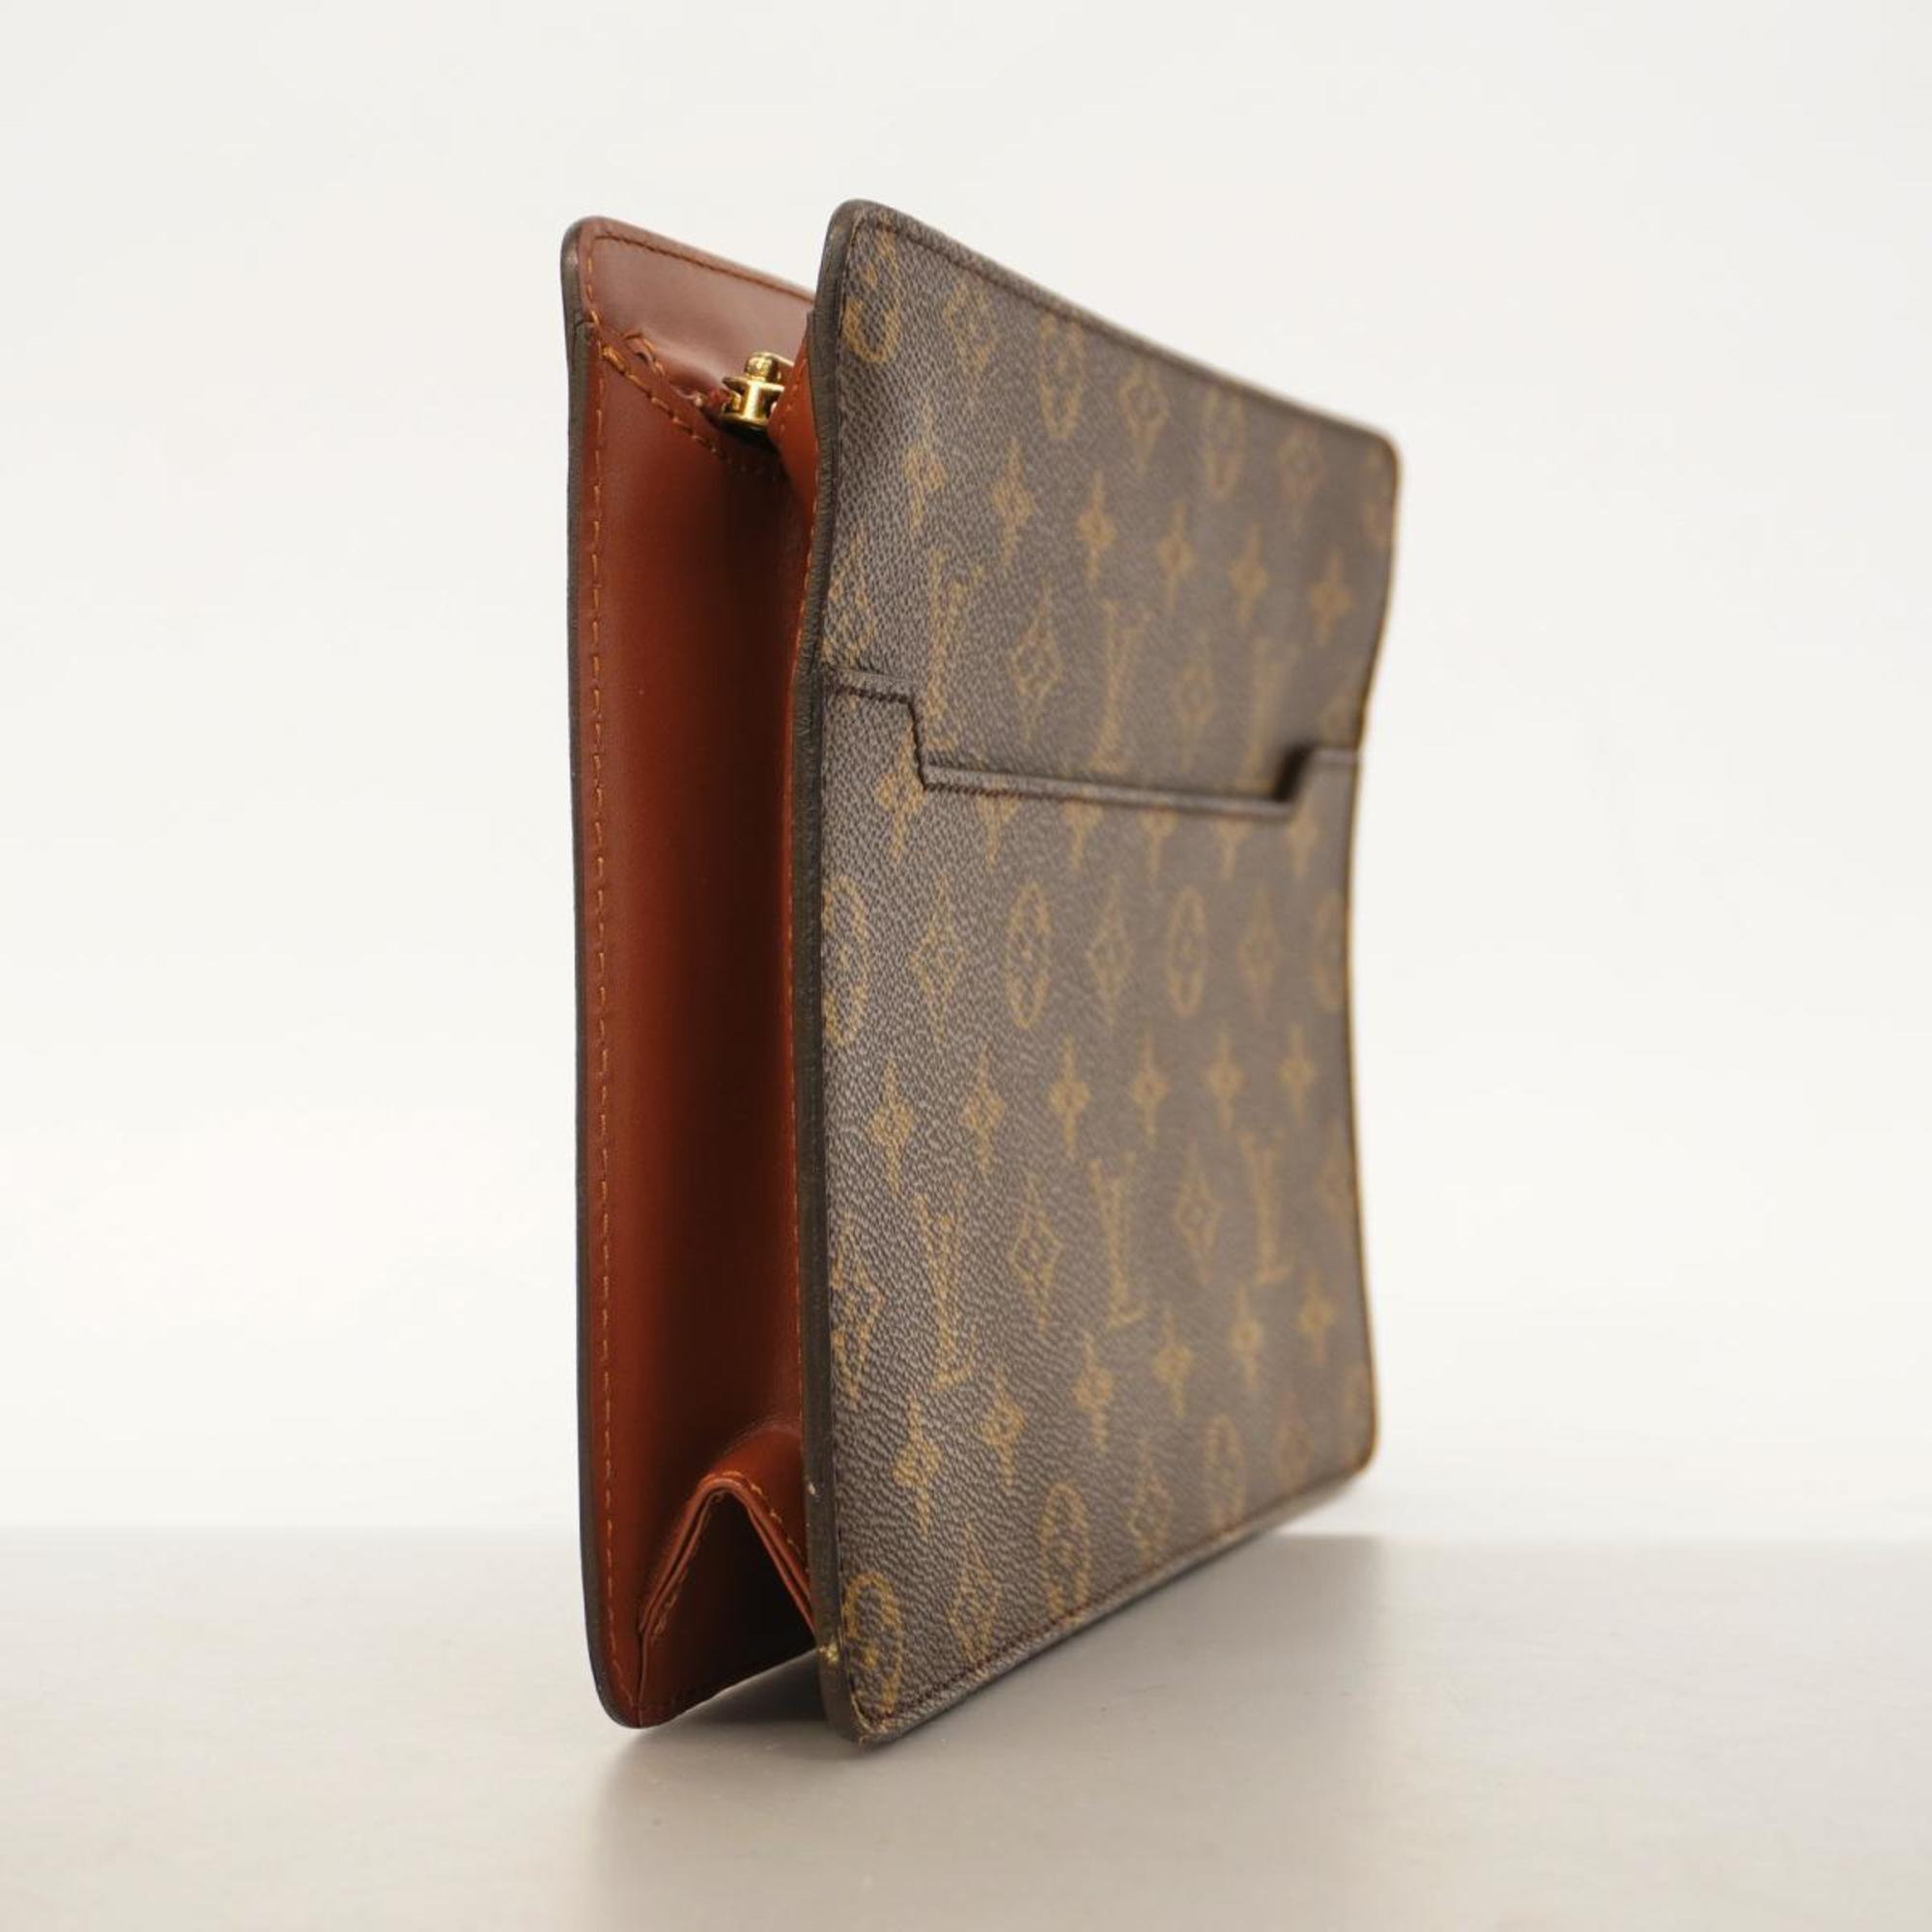 Louis Vuitton Clutch Bag Monogram Pochette Homme M51795 Brown Men's Women's